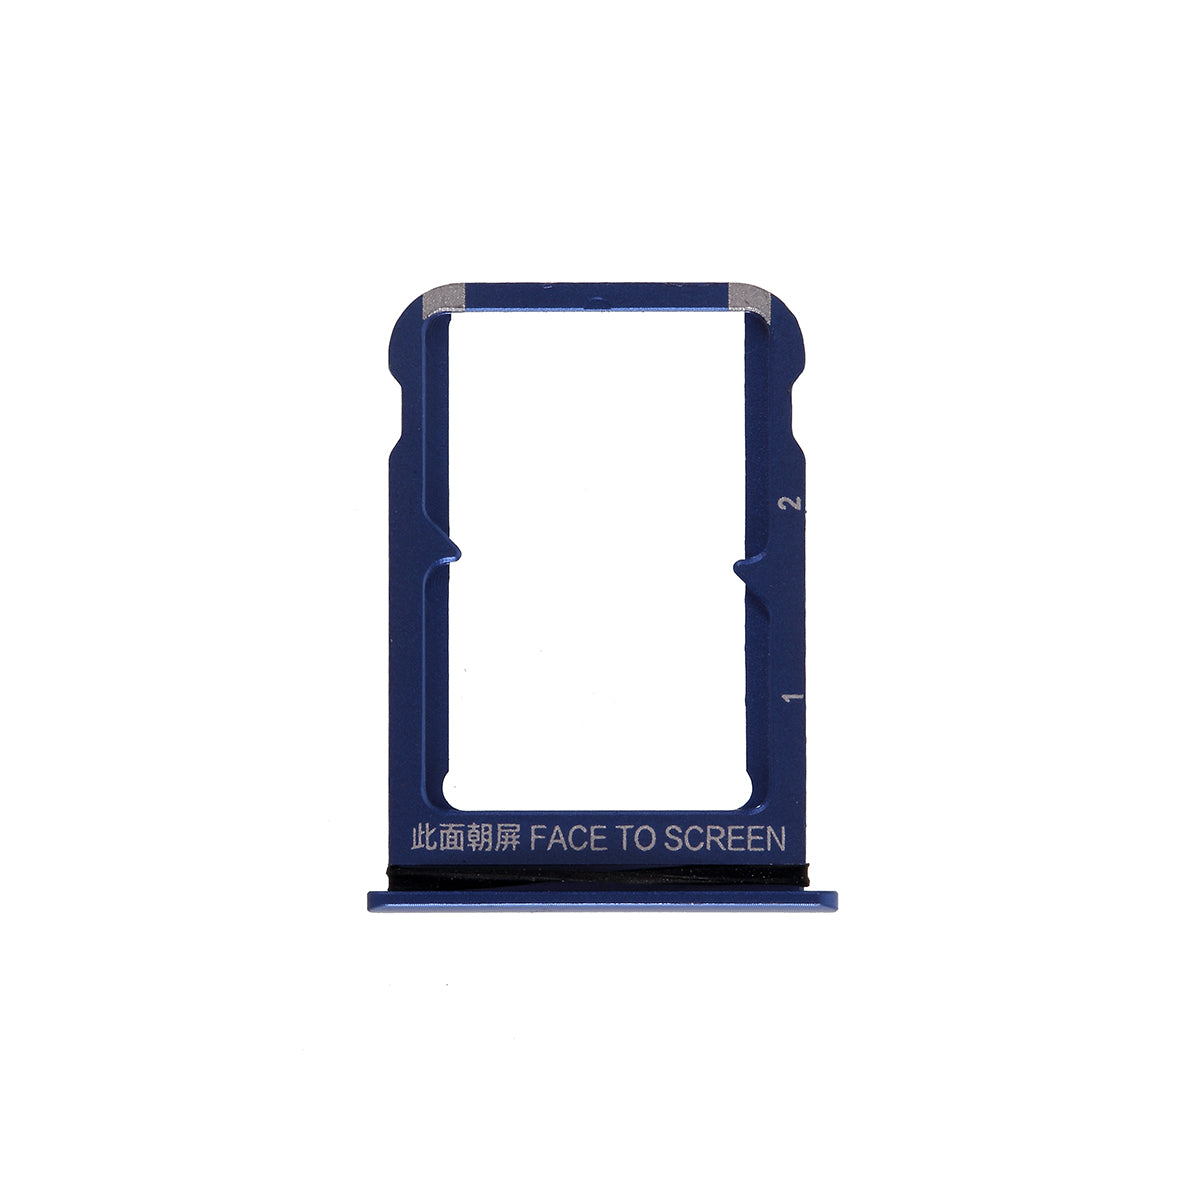 OEM SIM Card Tray Slots Part for Xiaomi Mi 9 SE - Blue